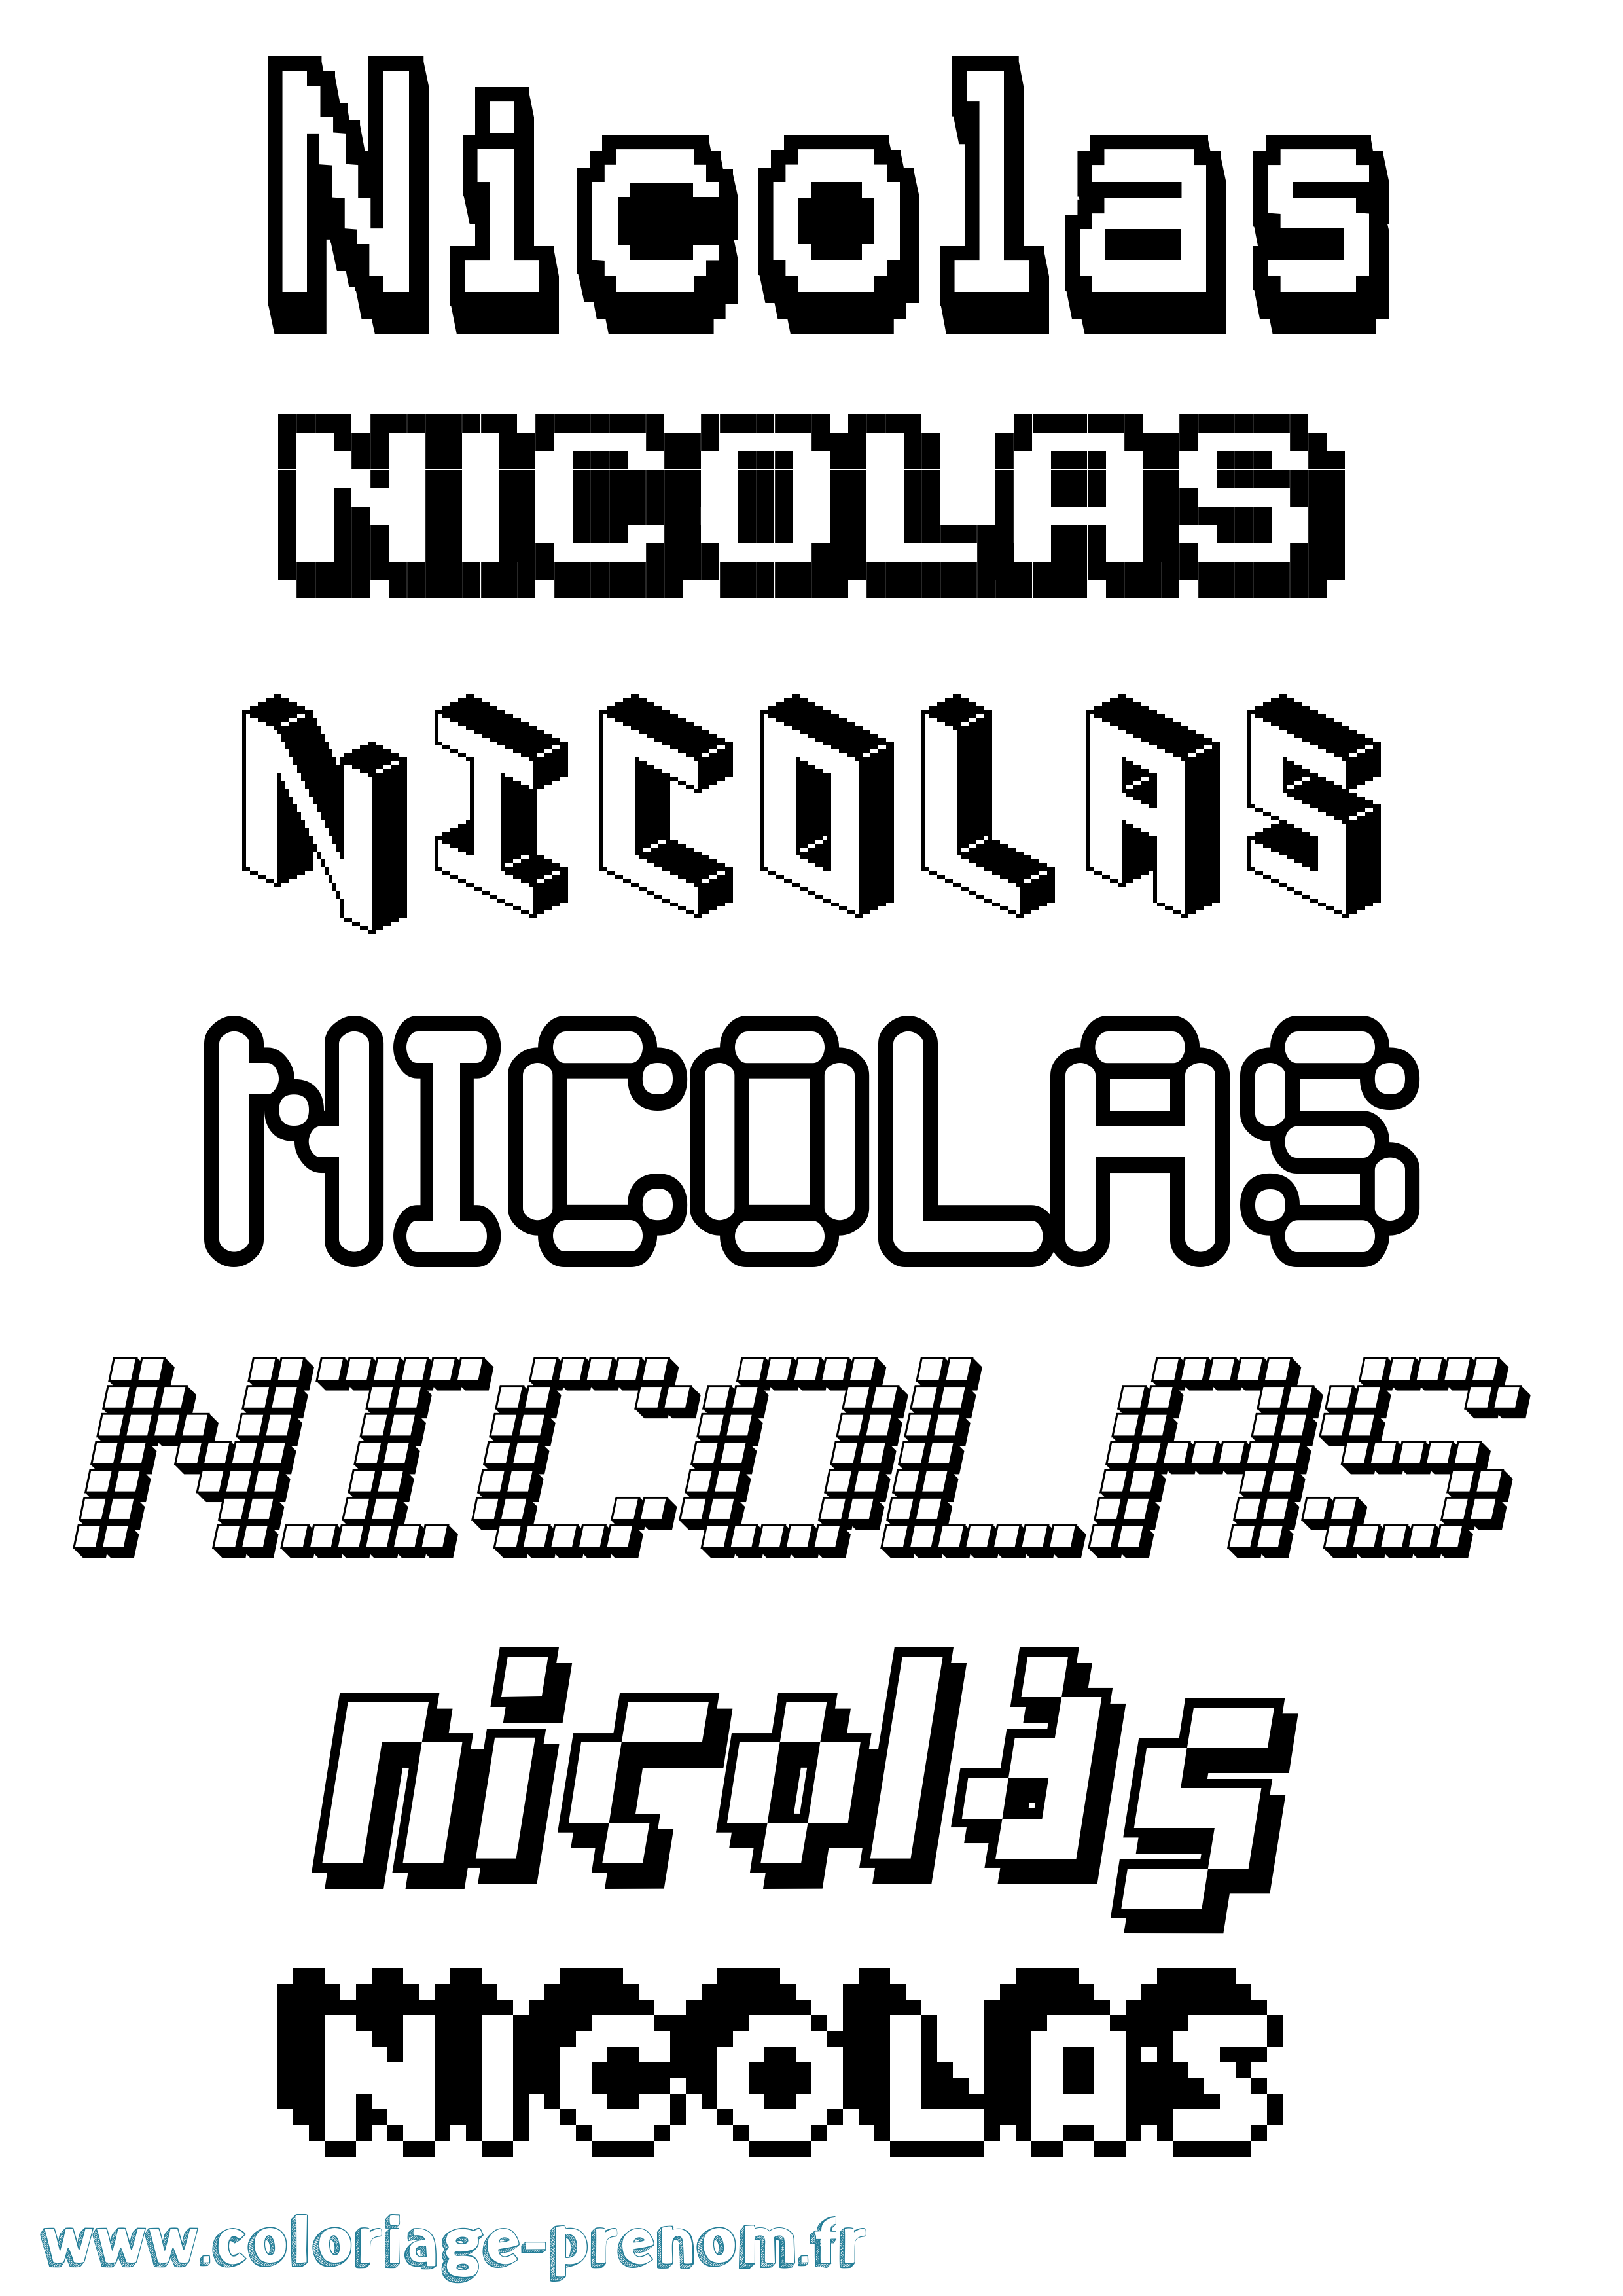 Coloriage prénom Nicolas Pixel